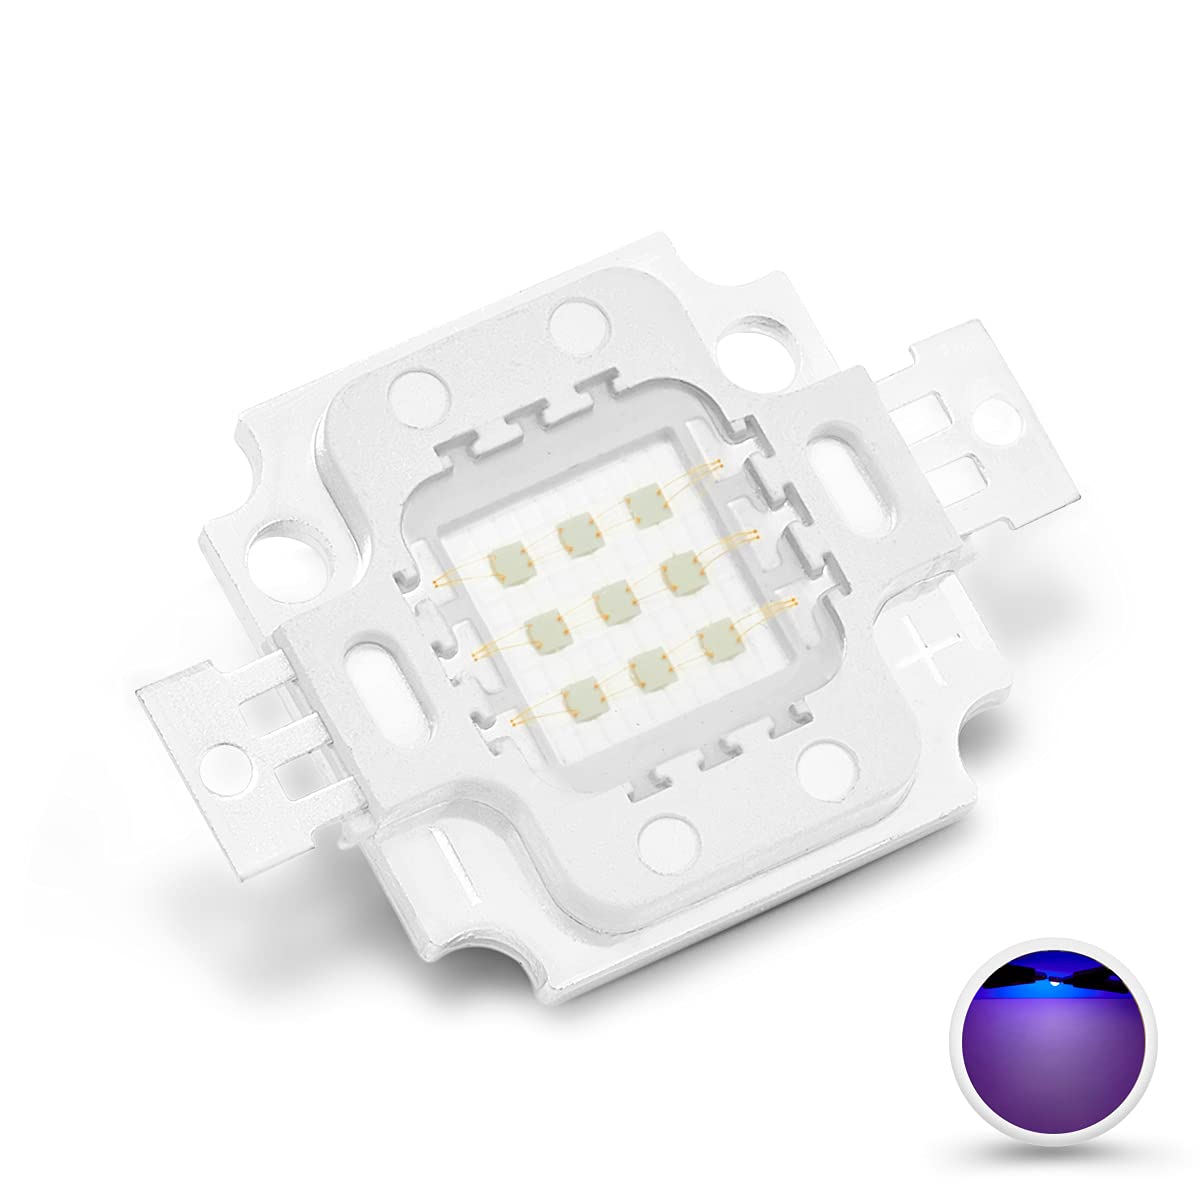 CHANZON High Power Led Chip 10W Purple Ultraviolet (UV 365nm / 900mA / DC 9V - 11V / 10 Watt) SMD COB Light Emitter Components Diode 10 W Ultra Violet Bulb Lamp Beads DIY Lighting